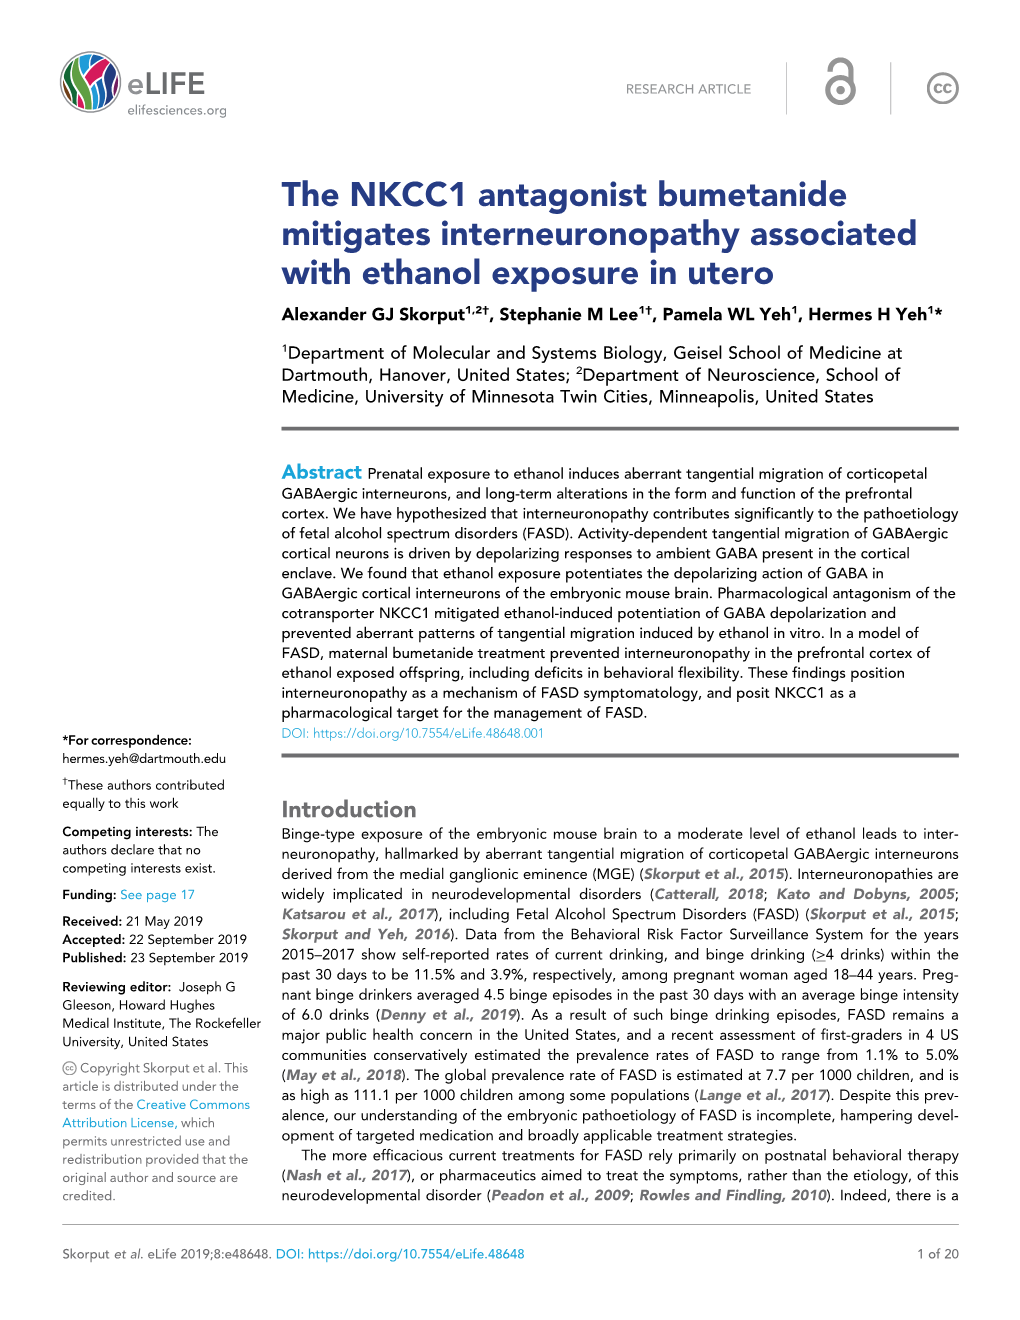 The NKCC1 Antagonist Bumetanide Mitigates Interneuronopathy